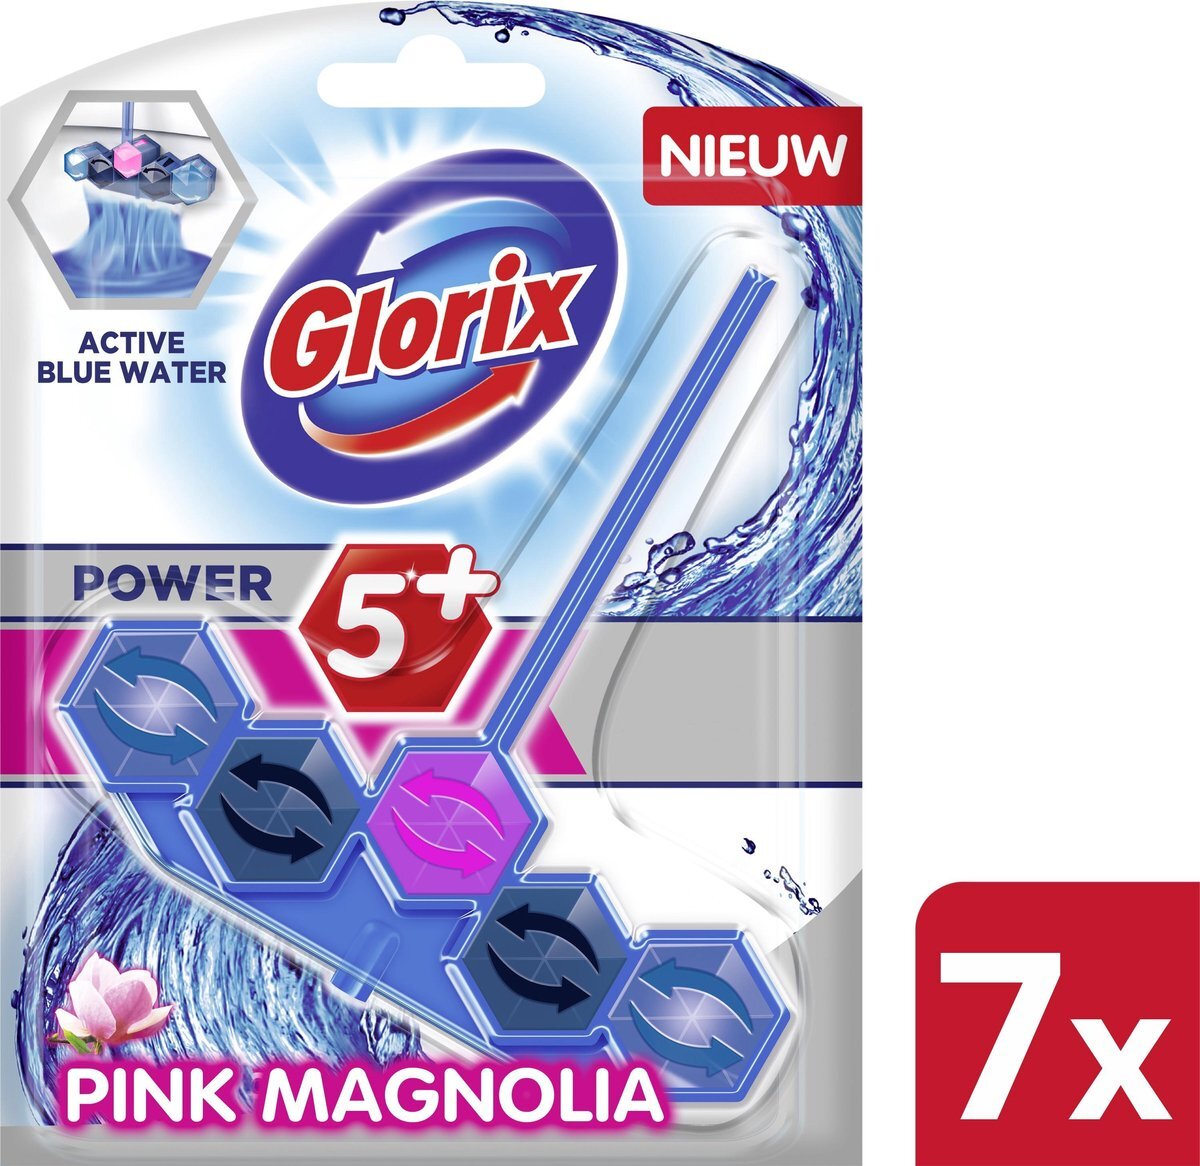 Glorix Blauw Water Pink Magnolia Wc Blok